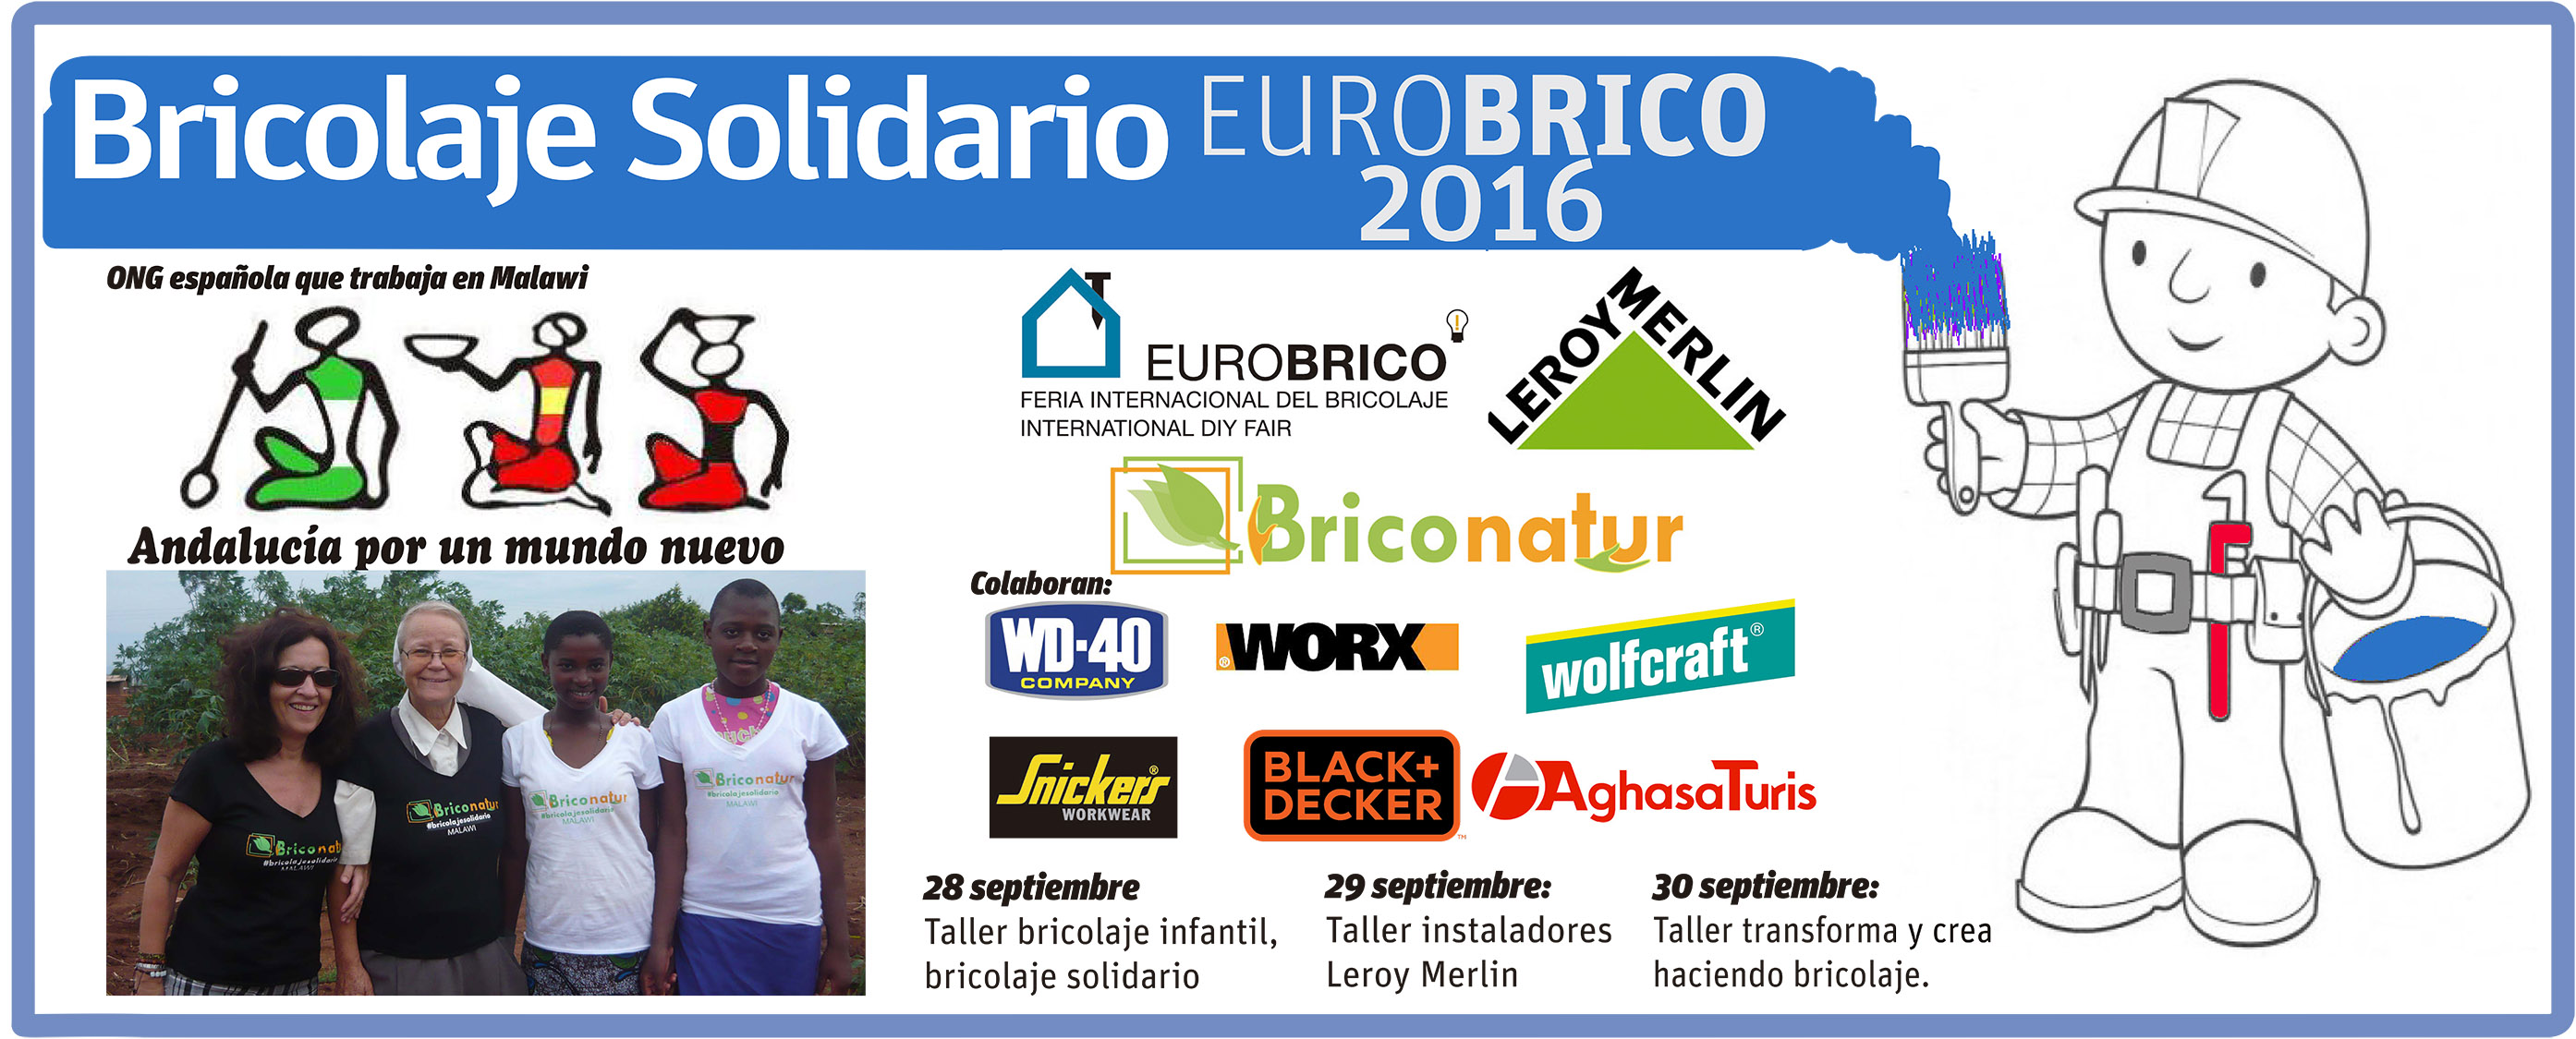 You are currently viewing Bricolaje solidario y talleres para instaladores, nel programma delle attività di Eurobrico